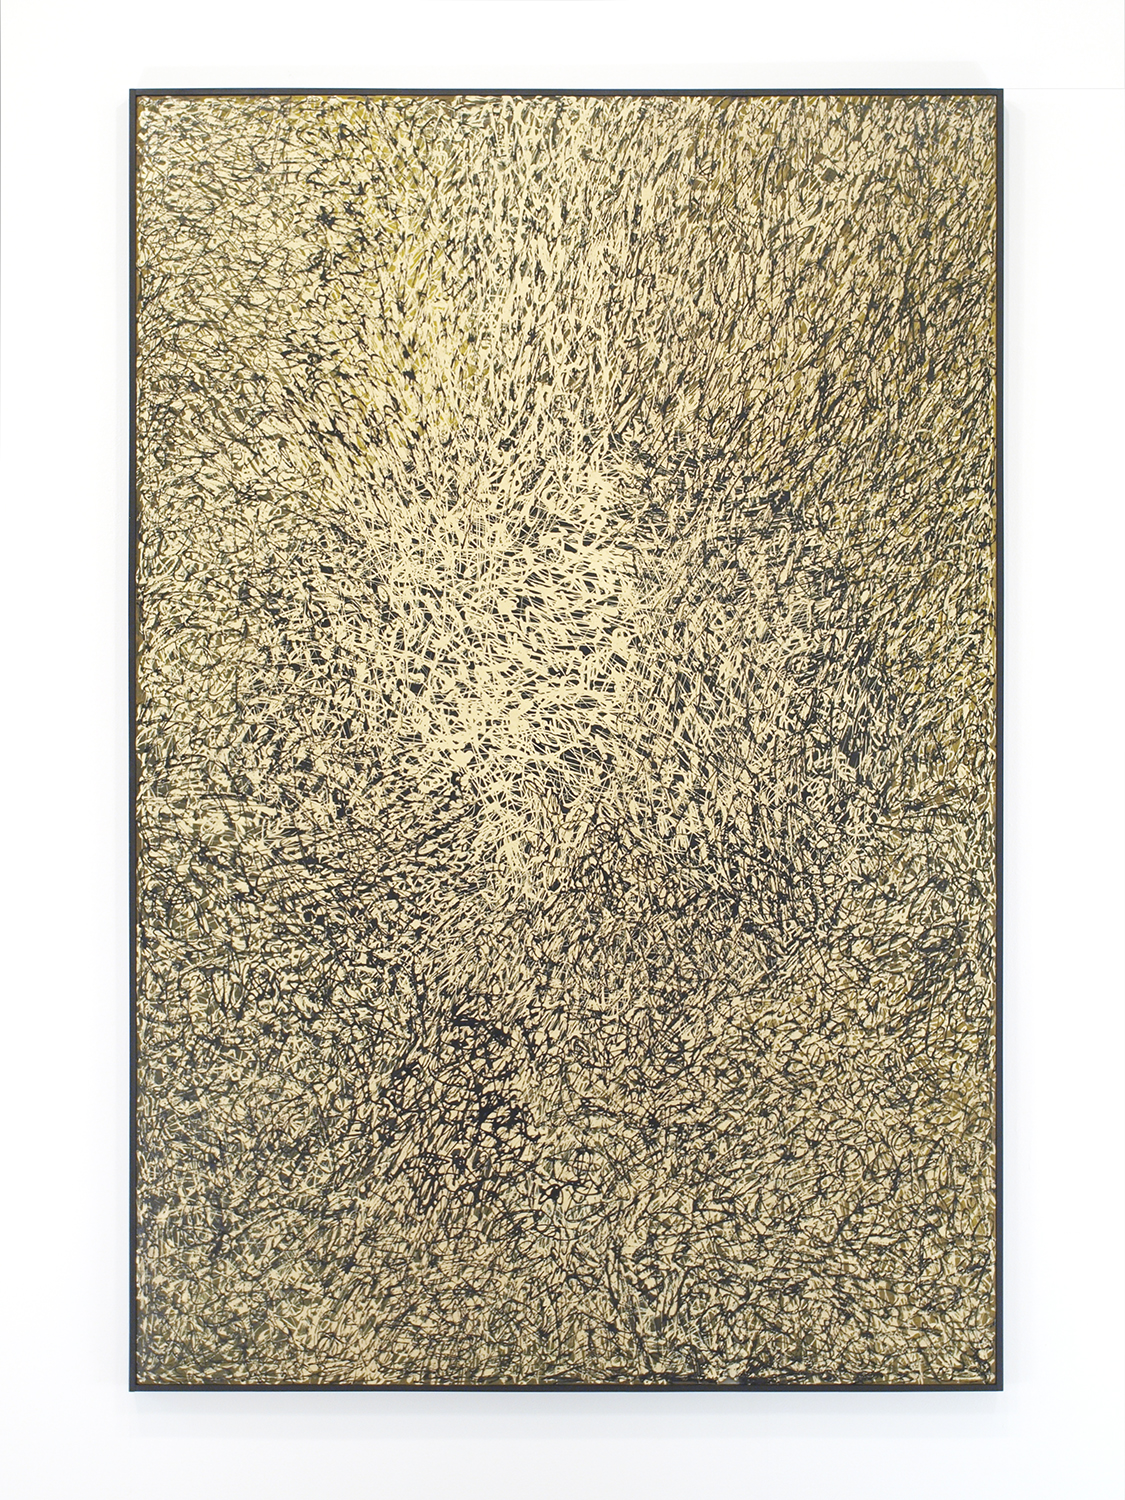 Enamel on linen & wood pane1｜181.5 x 122.5 cm｜1963.11｜京都国立近代美術館蔵